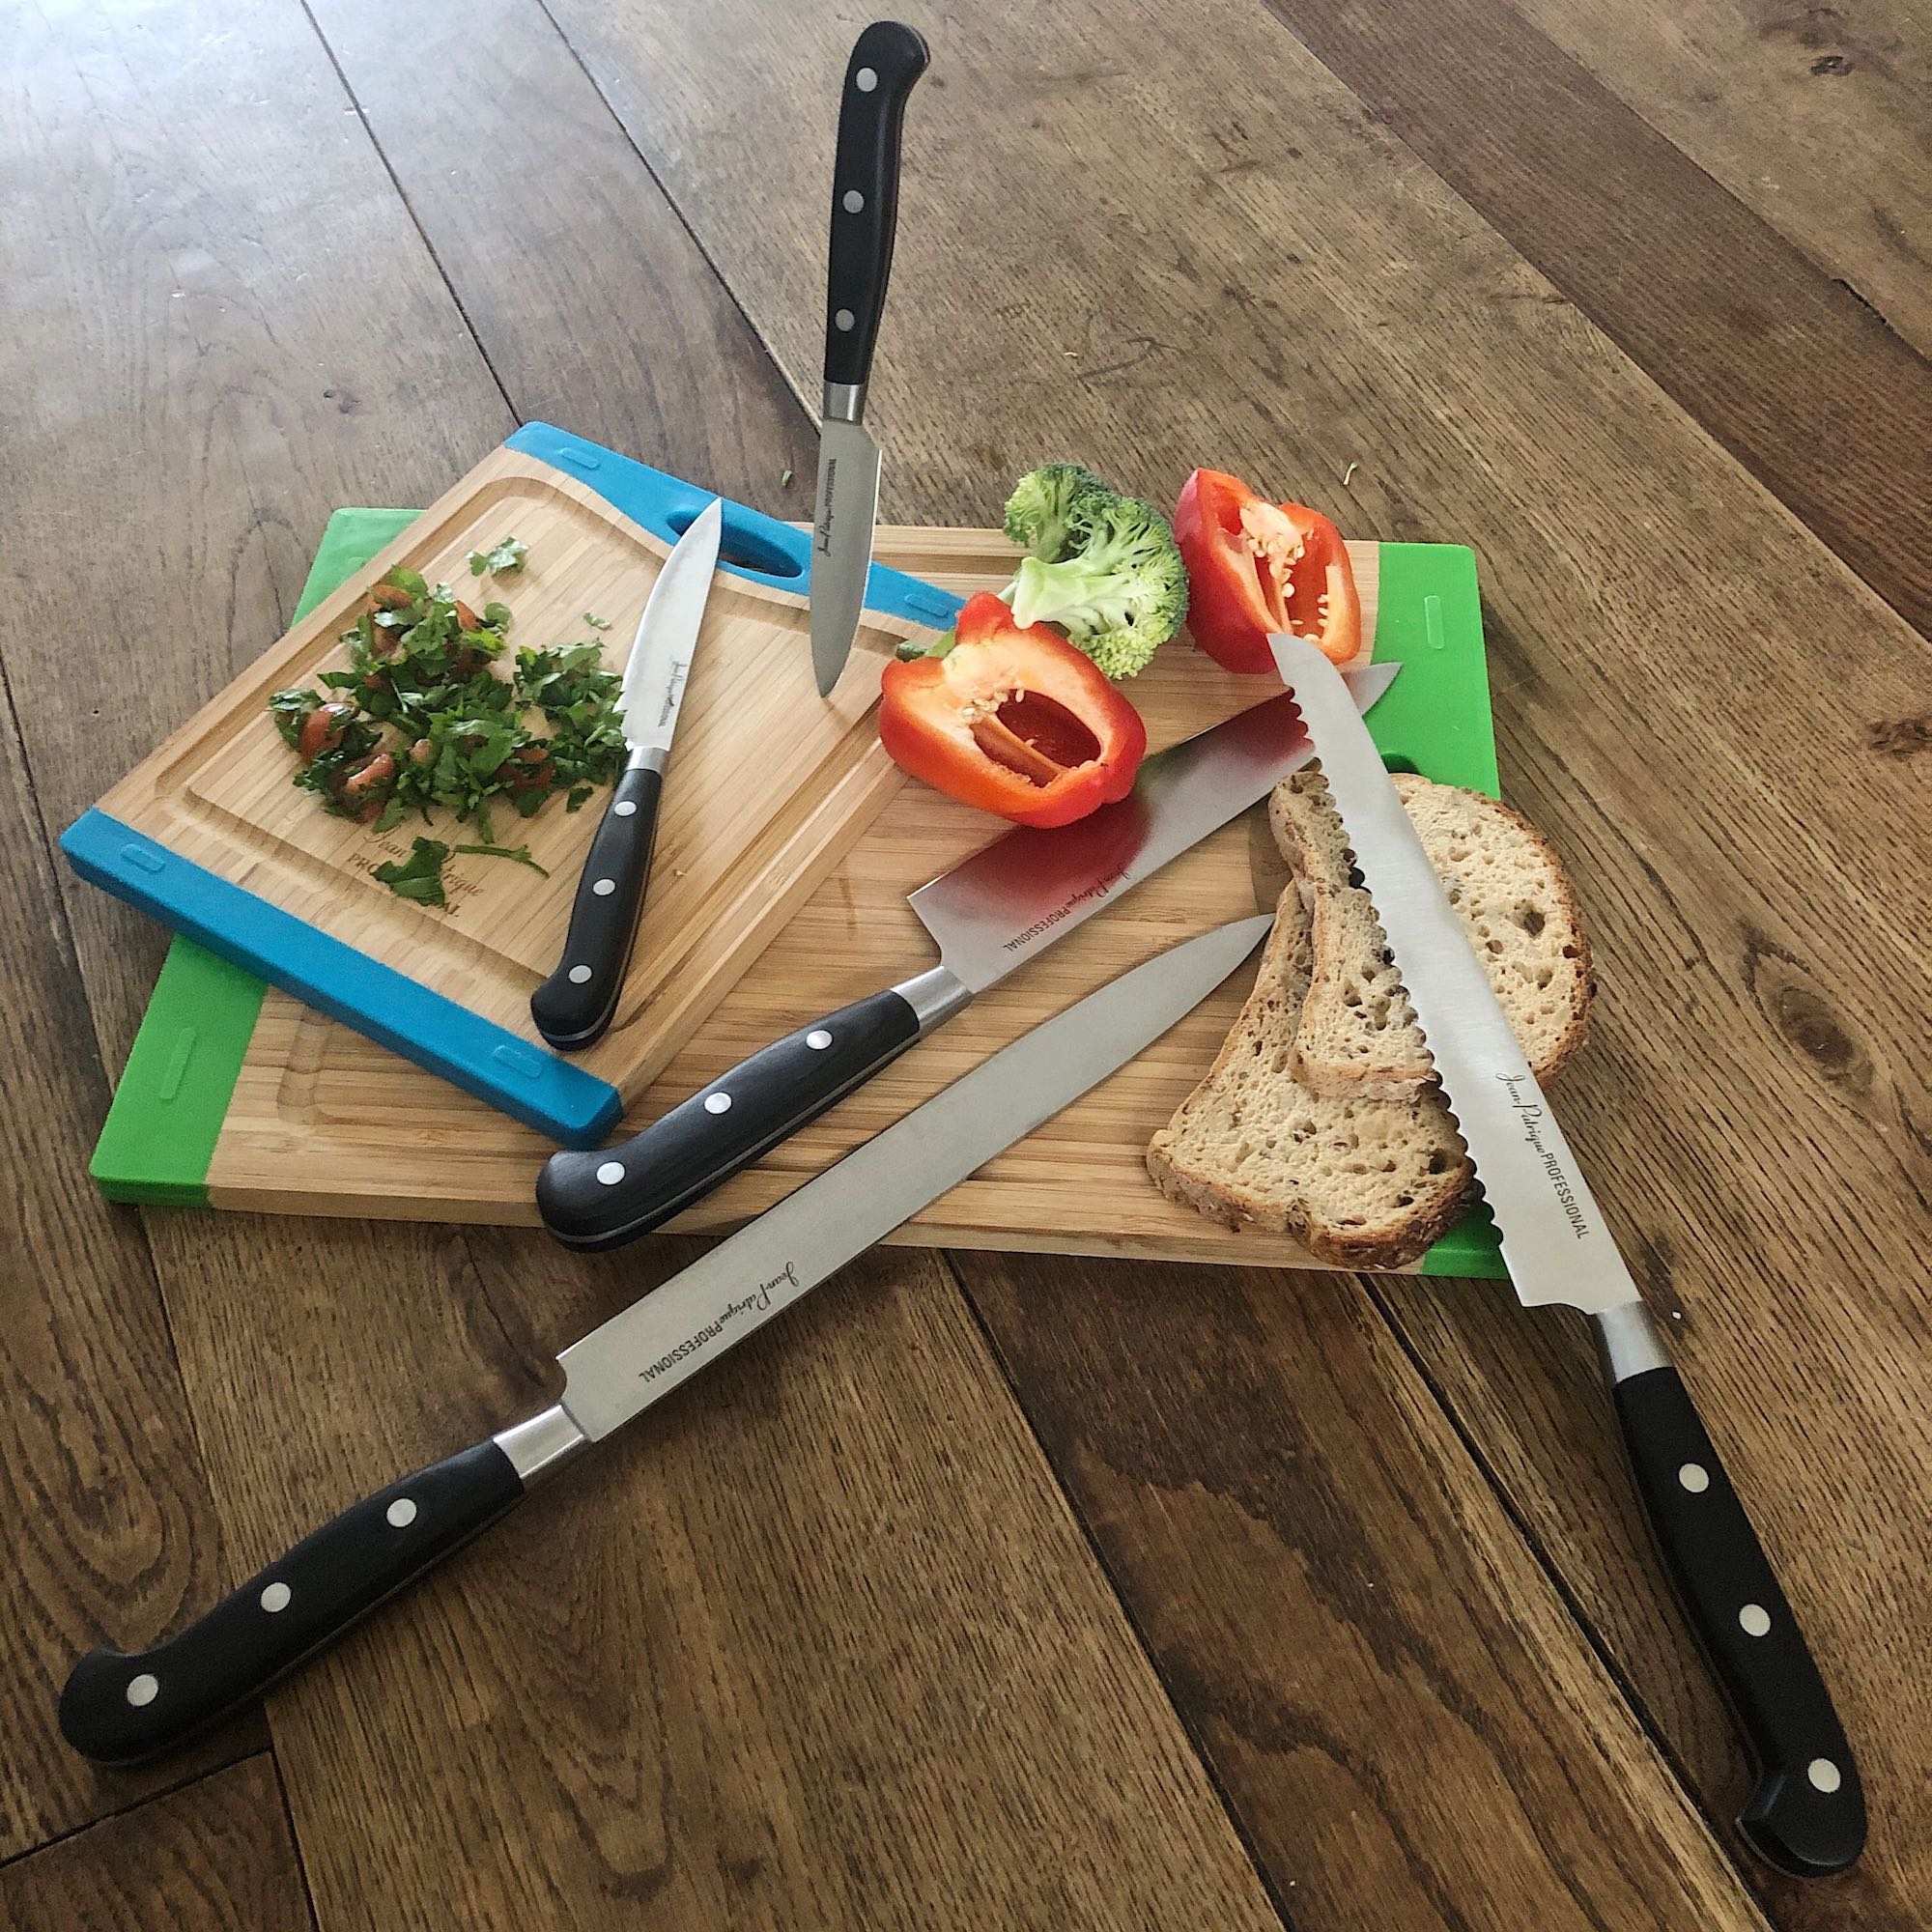 5-Piece Chef Knife Set | imarku